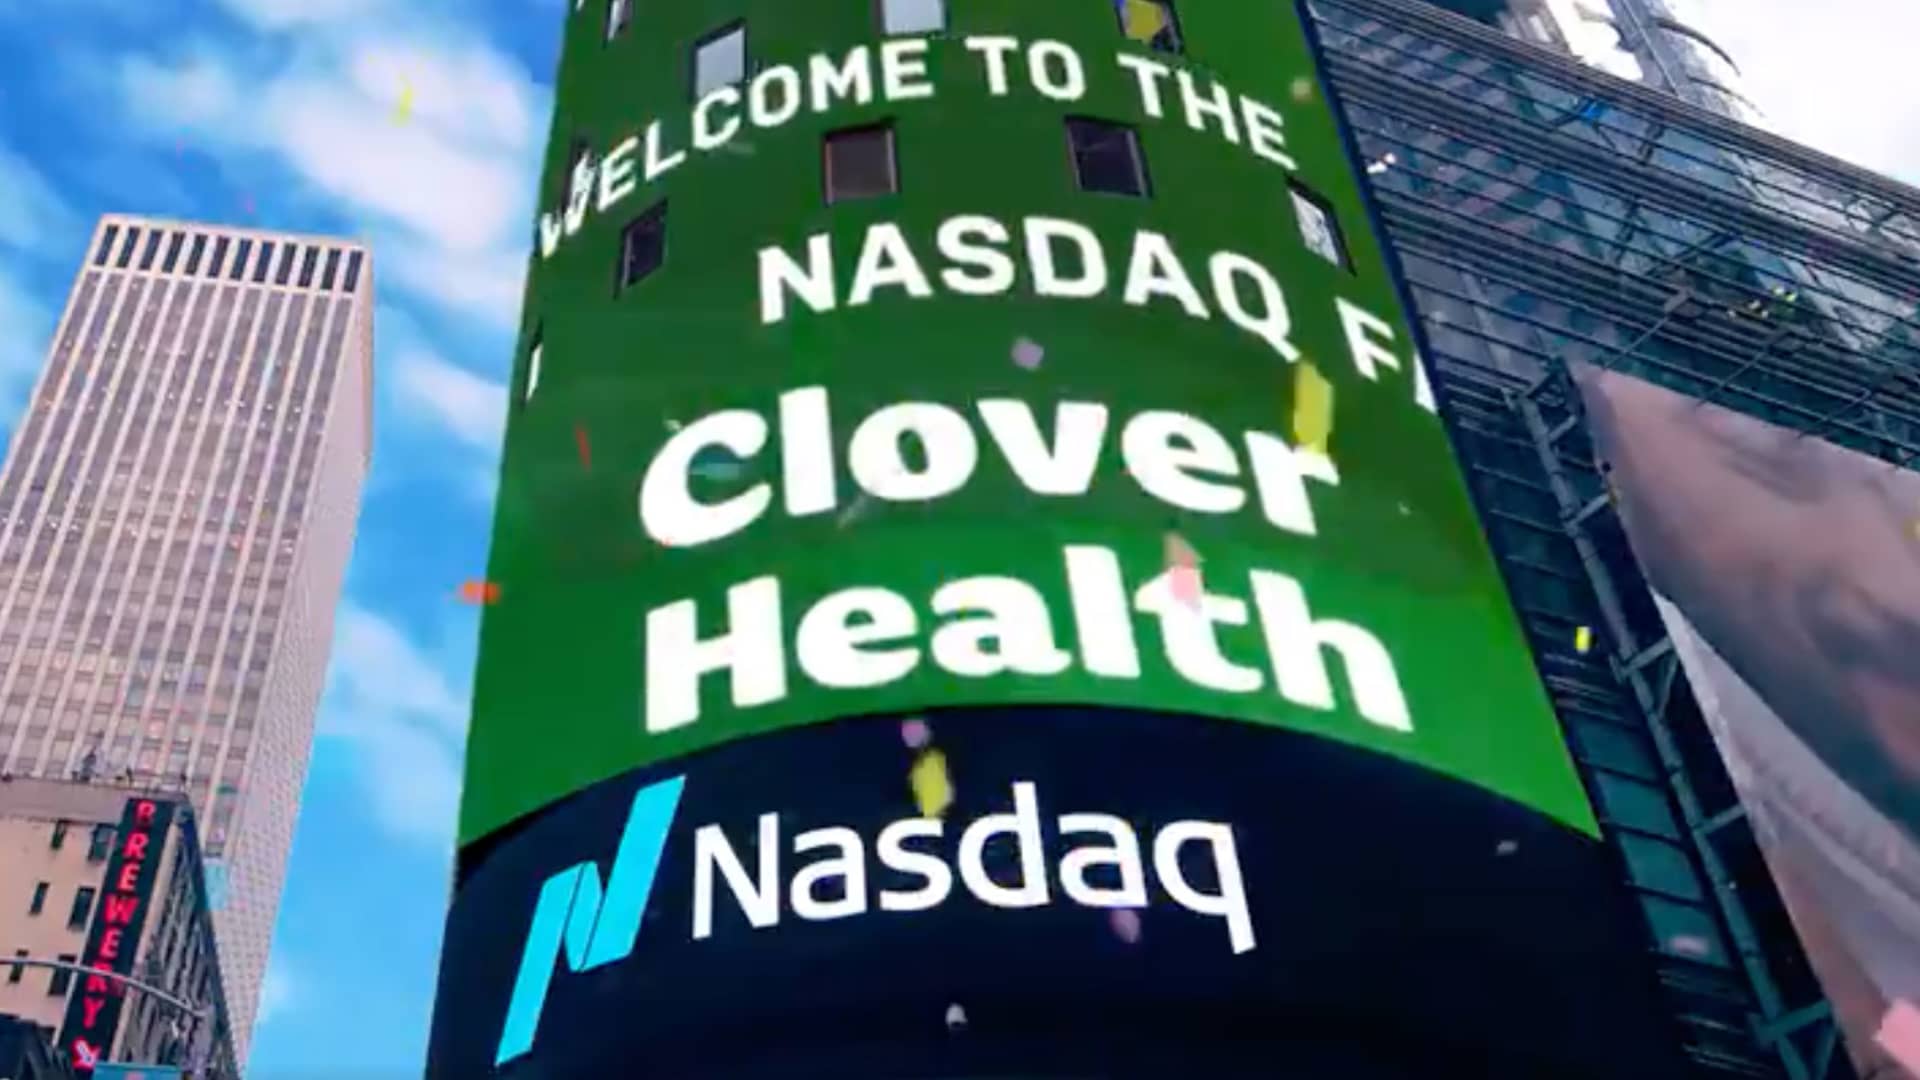 Clover Health featured at the Nasdaq